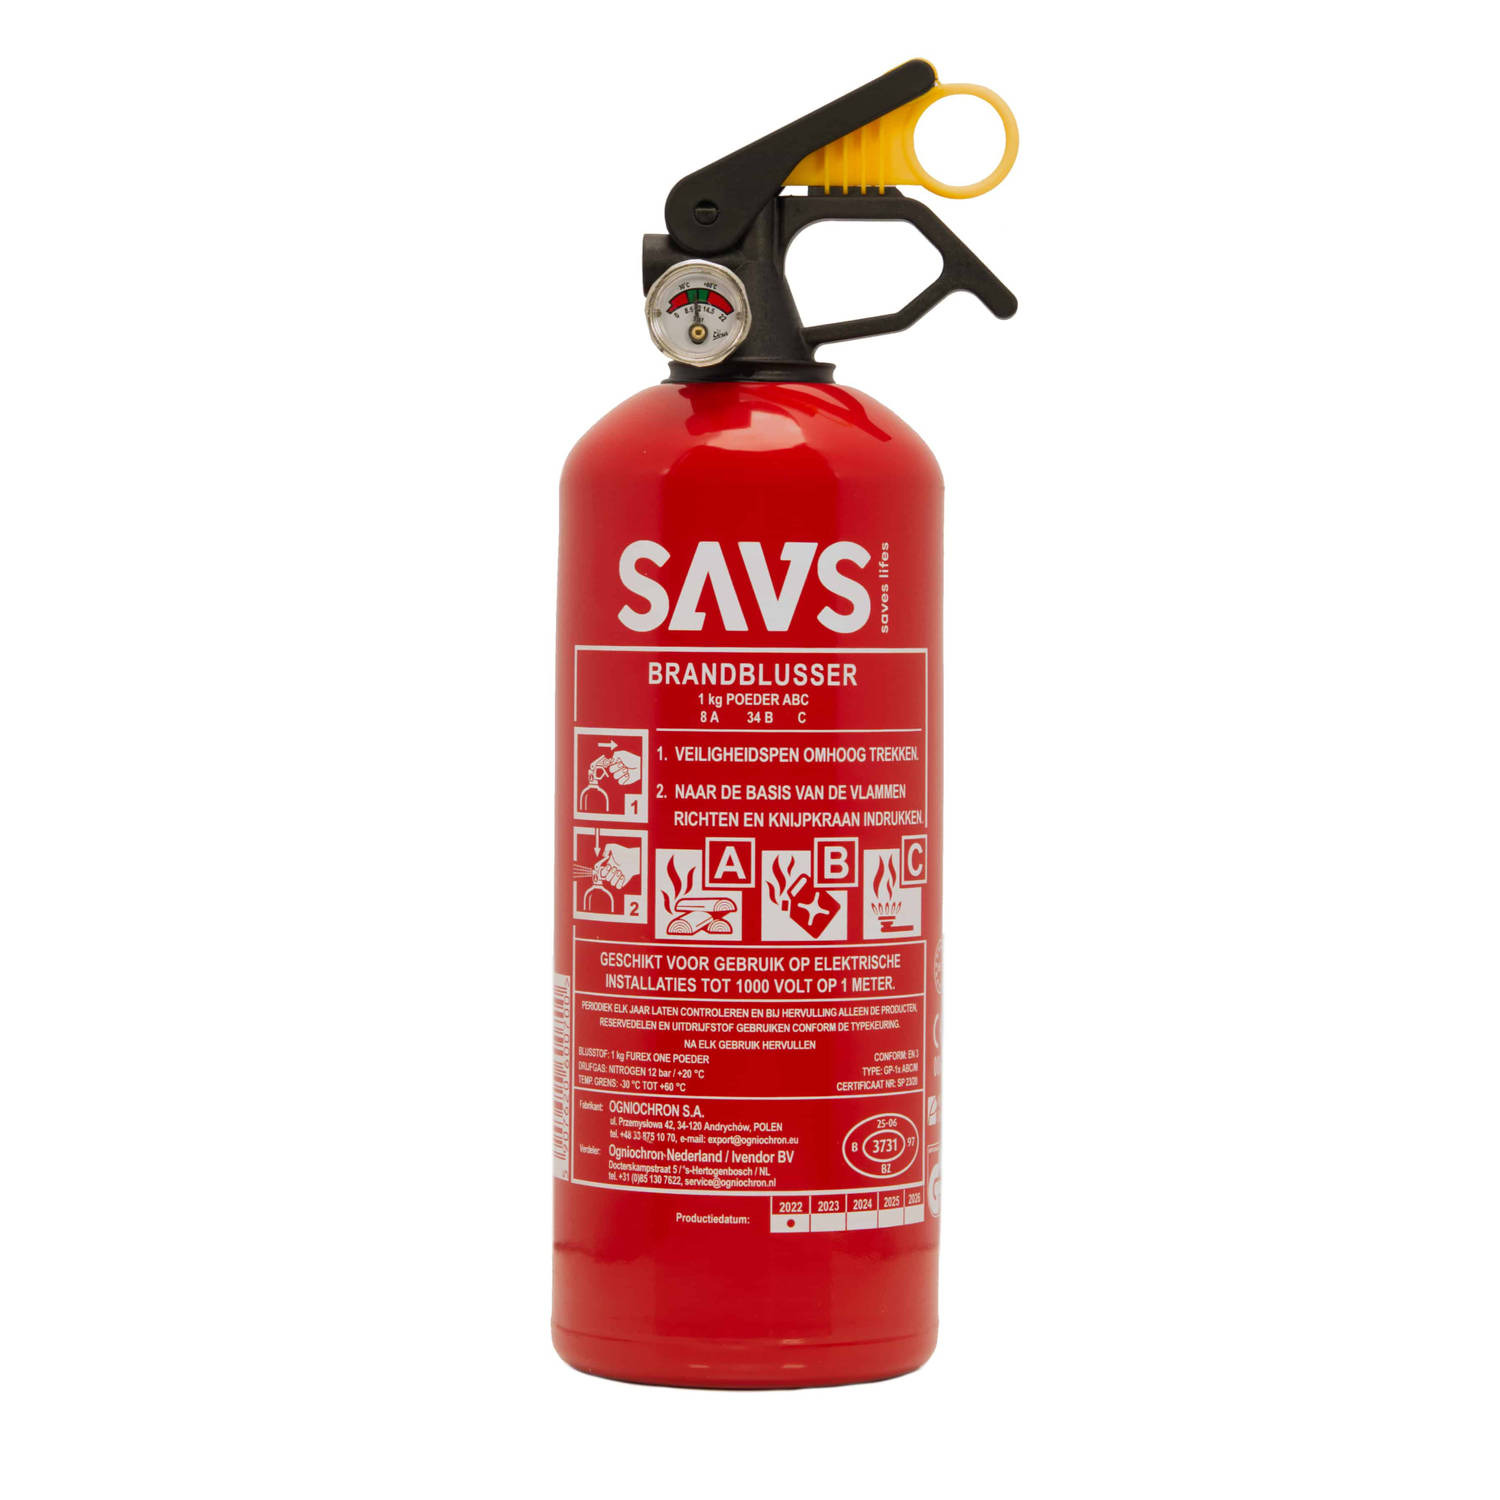 SAVS® Brandblusser poeder 1 kg - GP-1x ABC/MP - Blusrating 8A 34B C - Geproduceerd in Europa